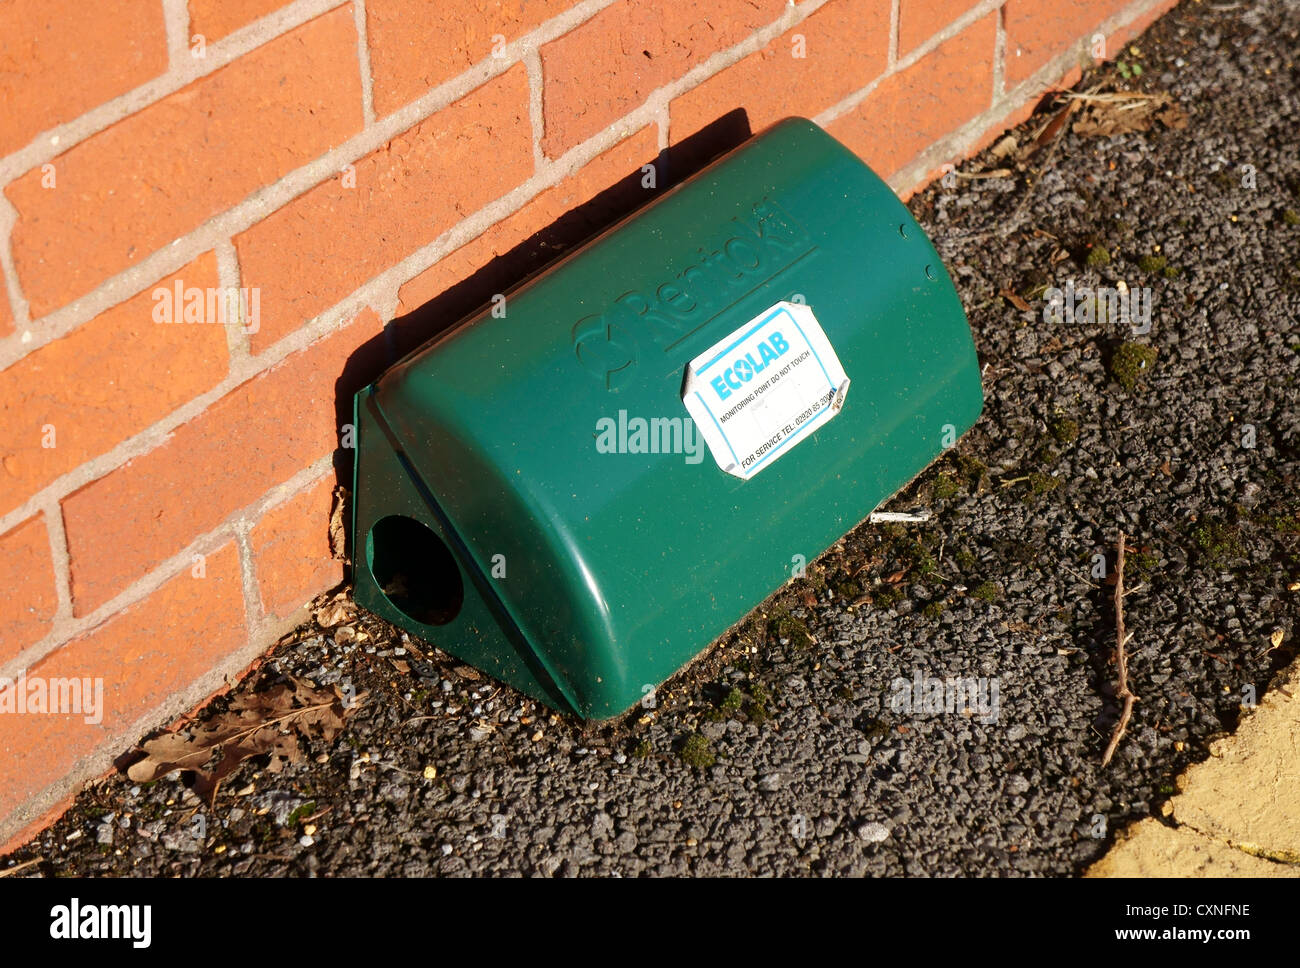 Rentokil Ecolab monitoring point bait box for rodents Stock Photo - Alamy